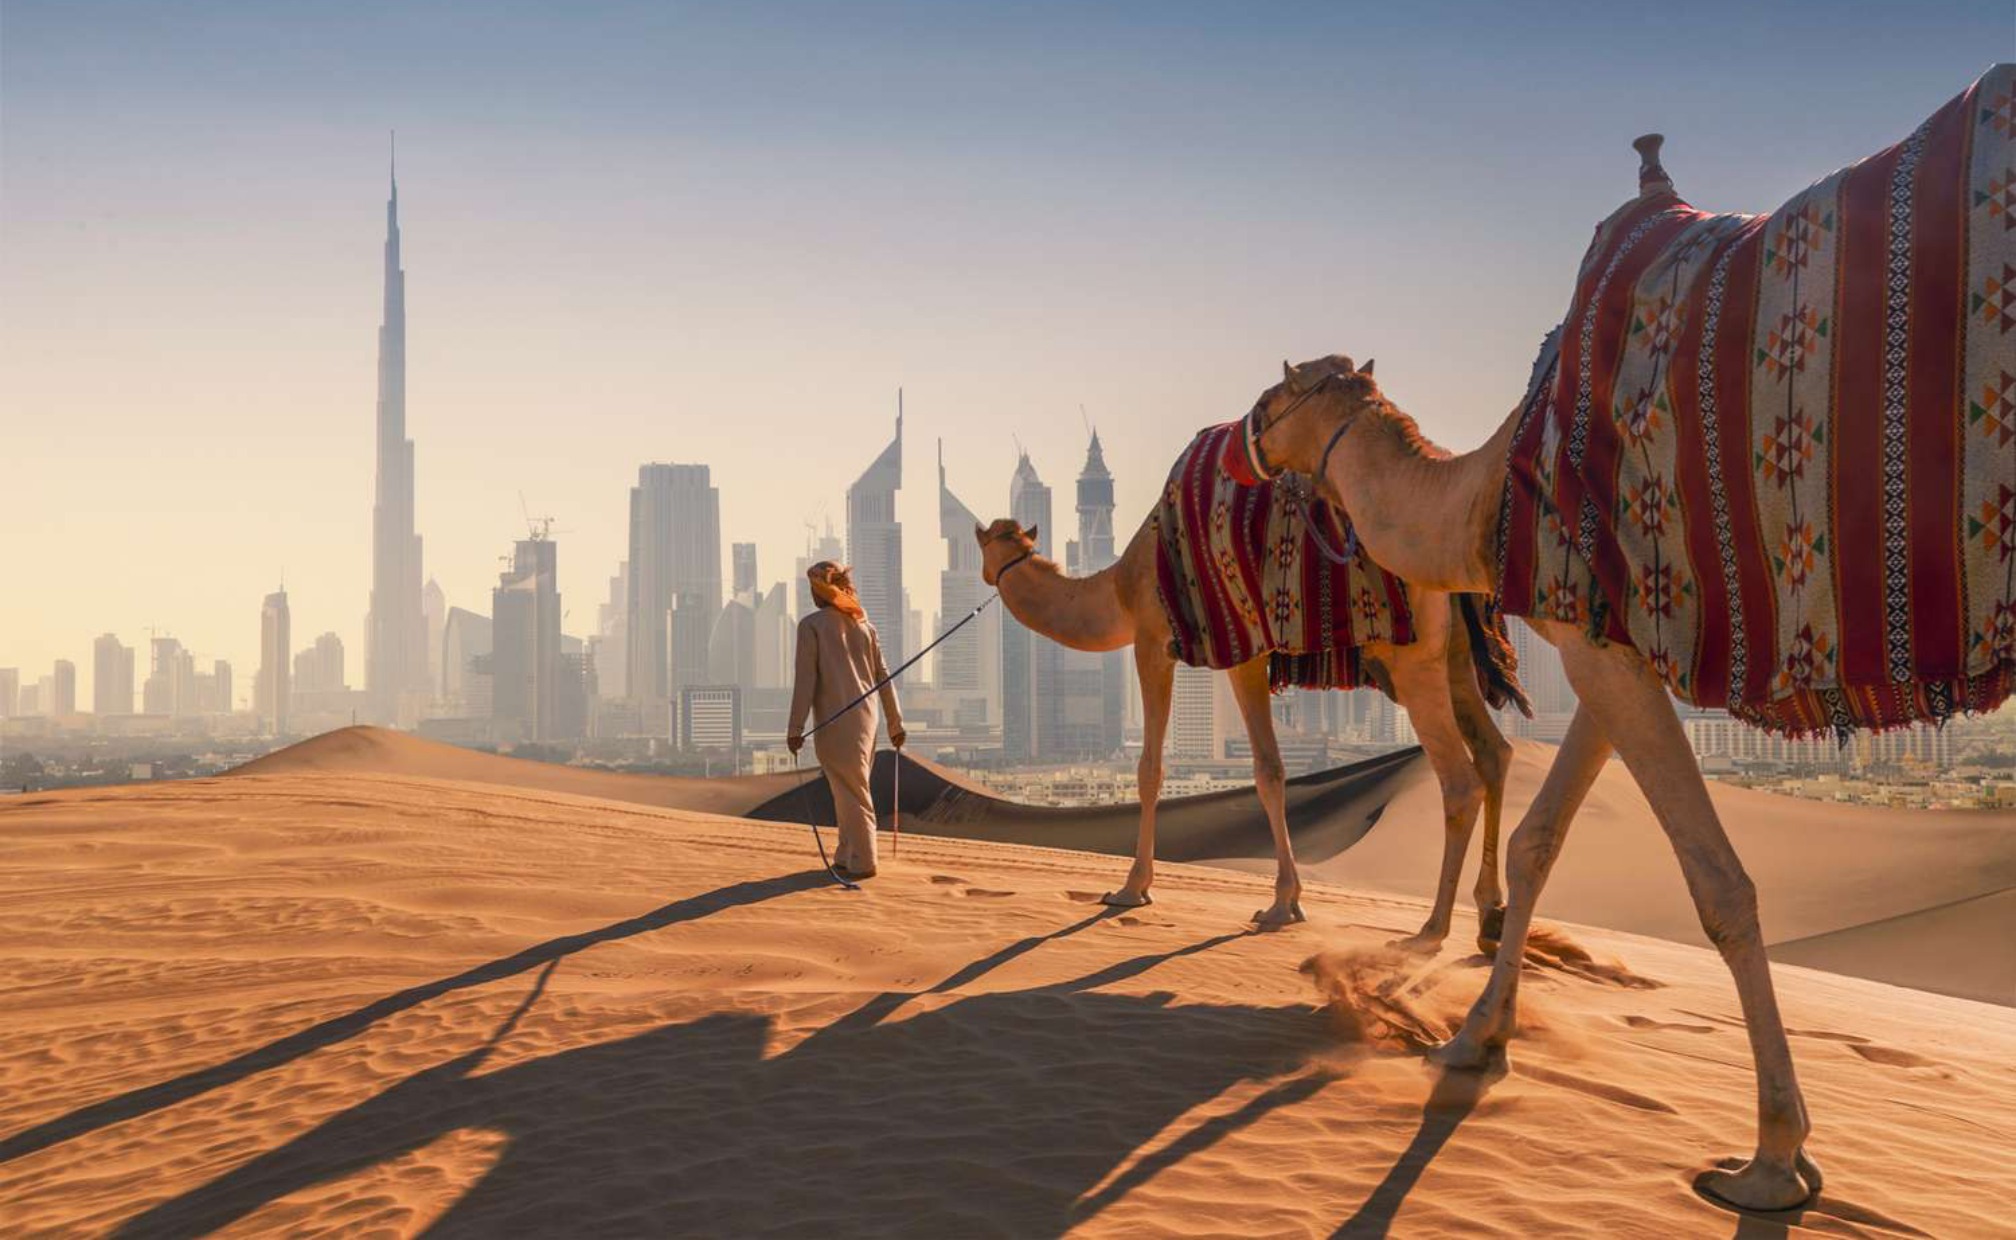 Potret Kota Dubai dari Gurun Pasir